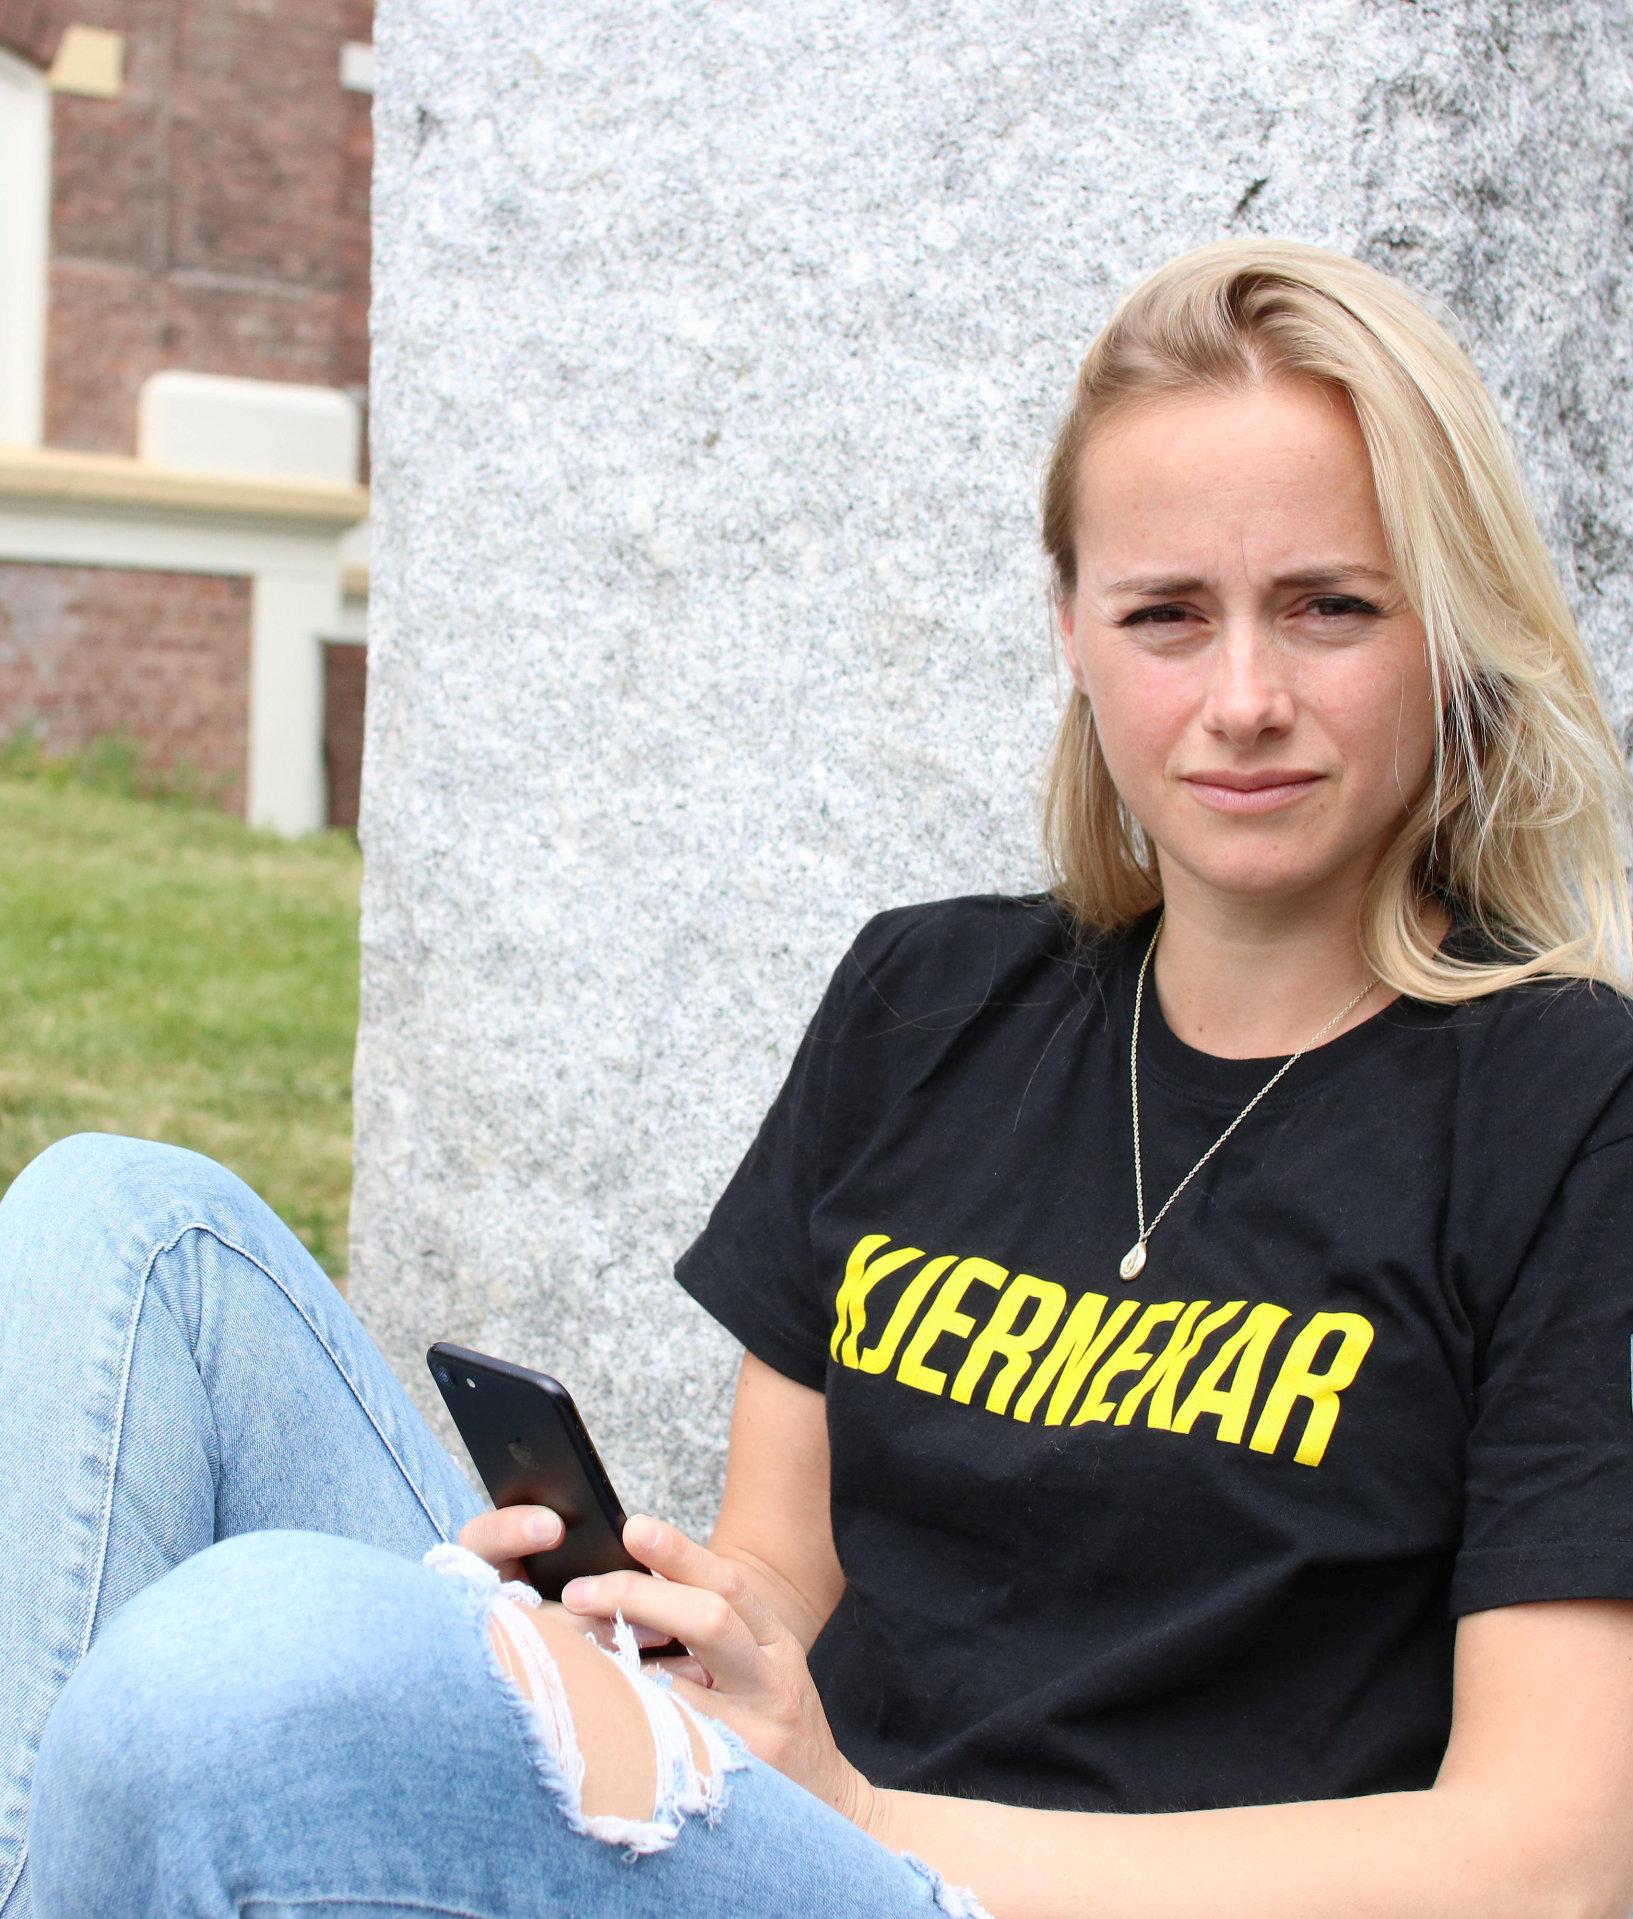 Snapchat brukernavn jenter norske Snapchat bilder